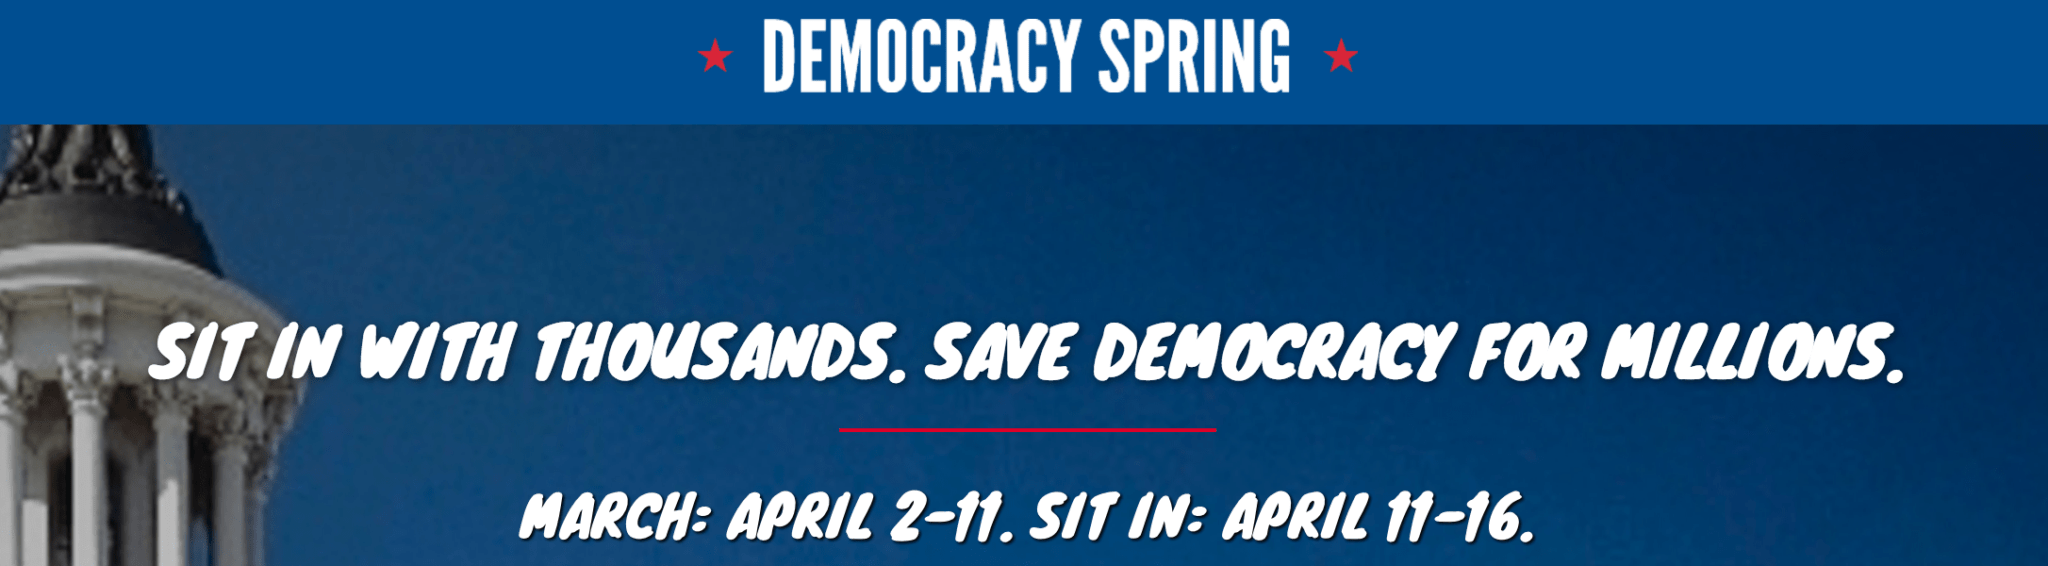 democracy spring